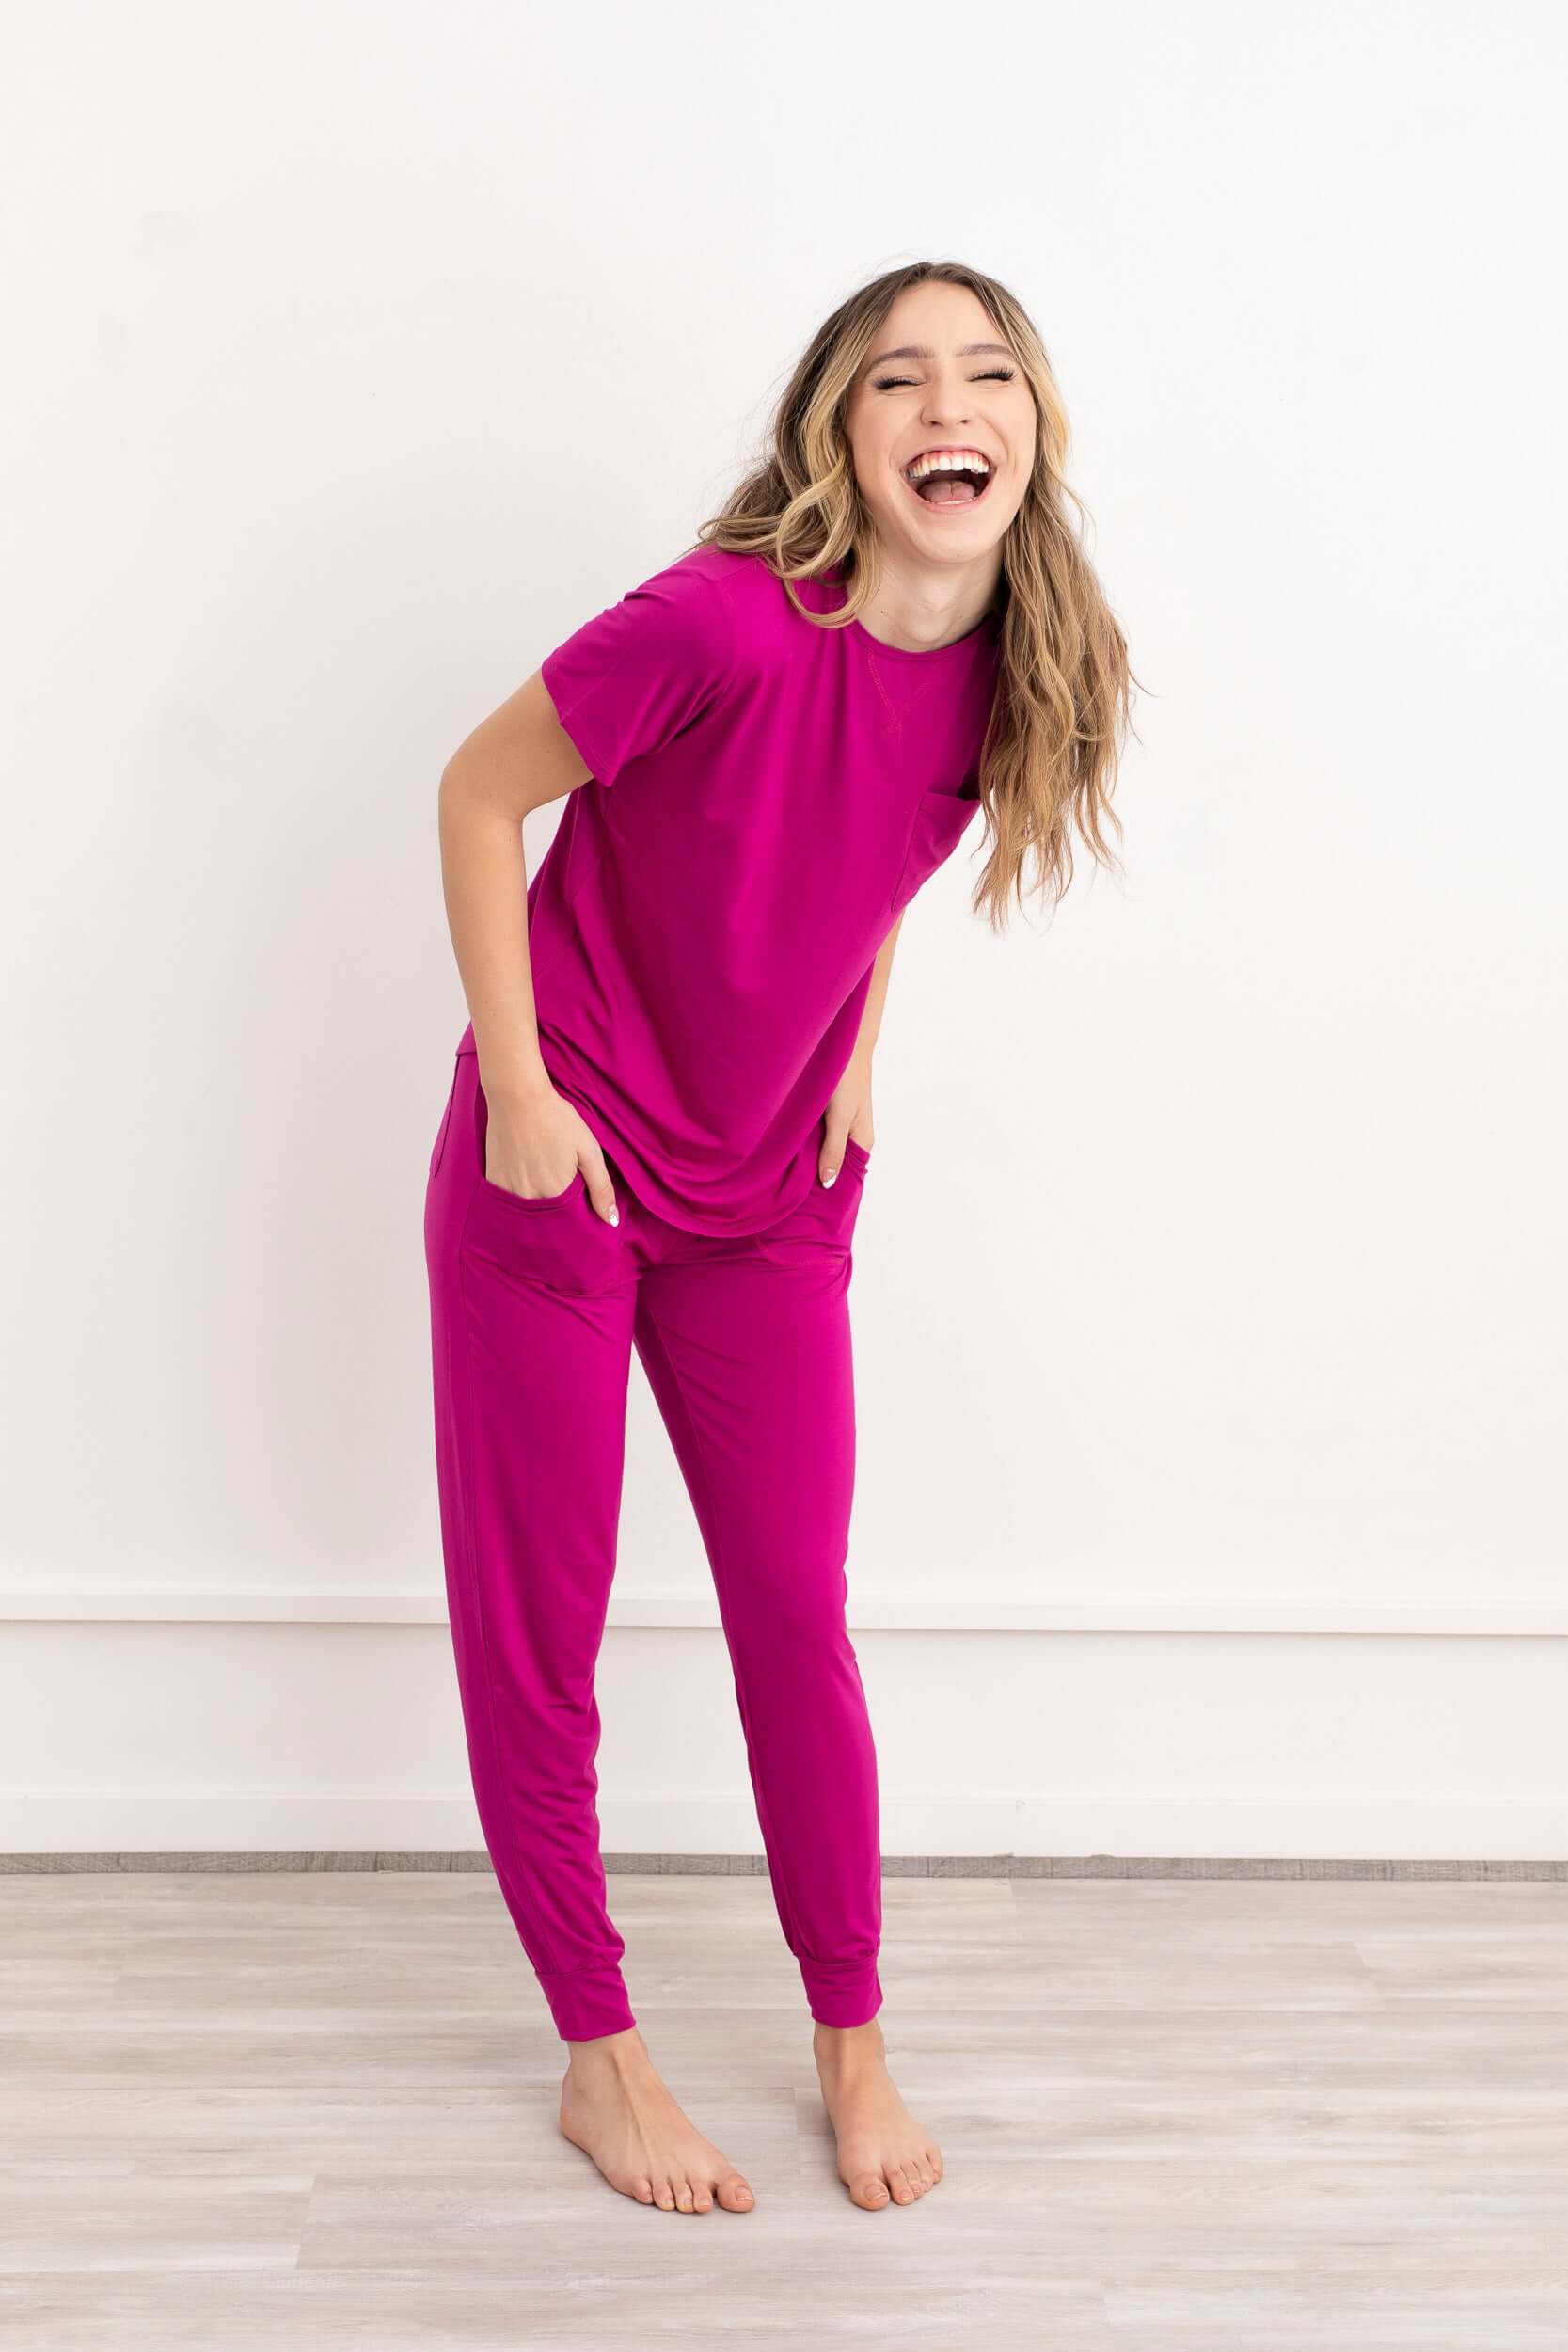 Soft, breathable pajamas for women | DAGSMEJAN BALANCE